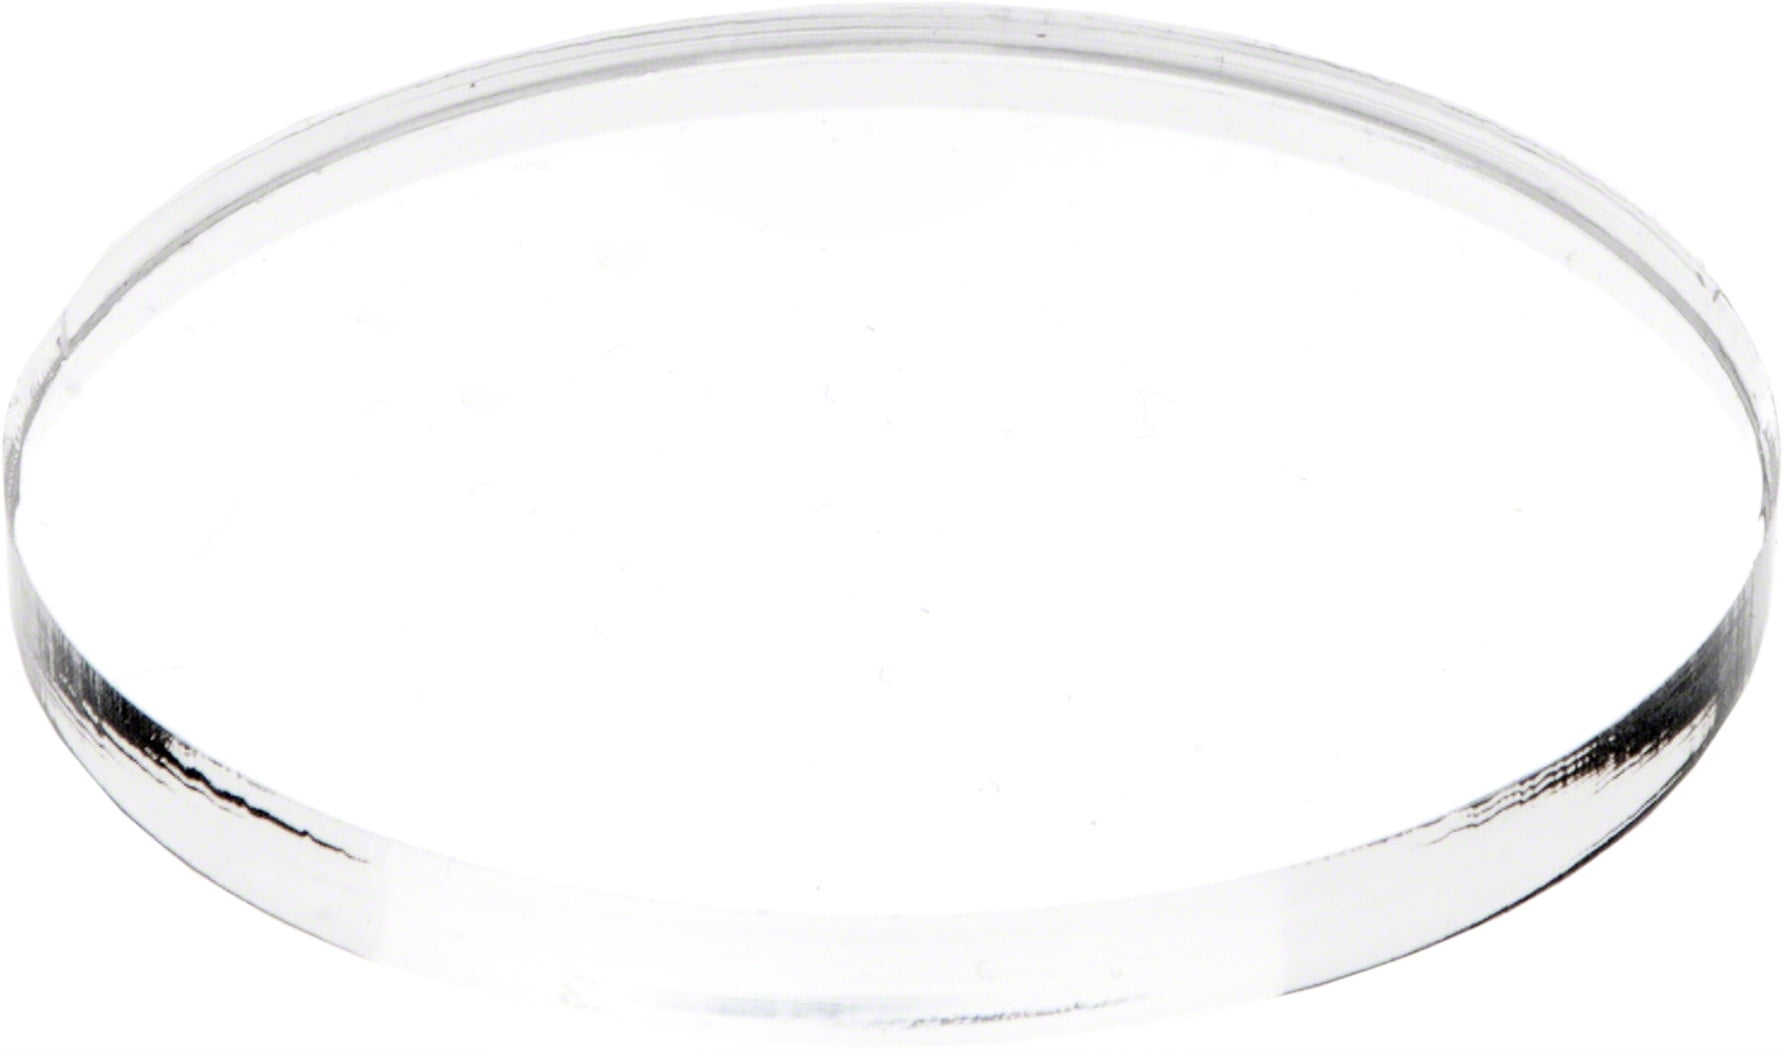 Plymor Clear Acrylic Round Standard-Edge Display Base 5" W x 5" D x 0.375" H 